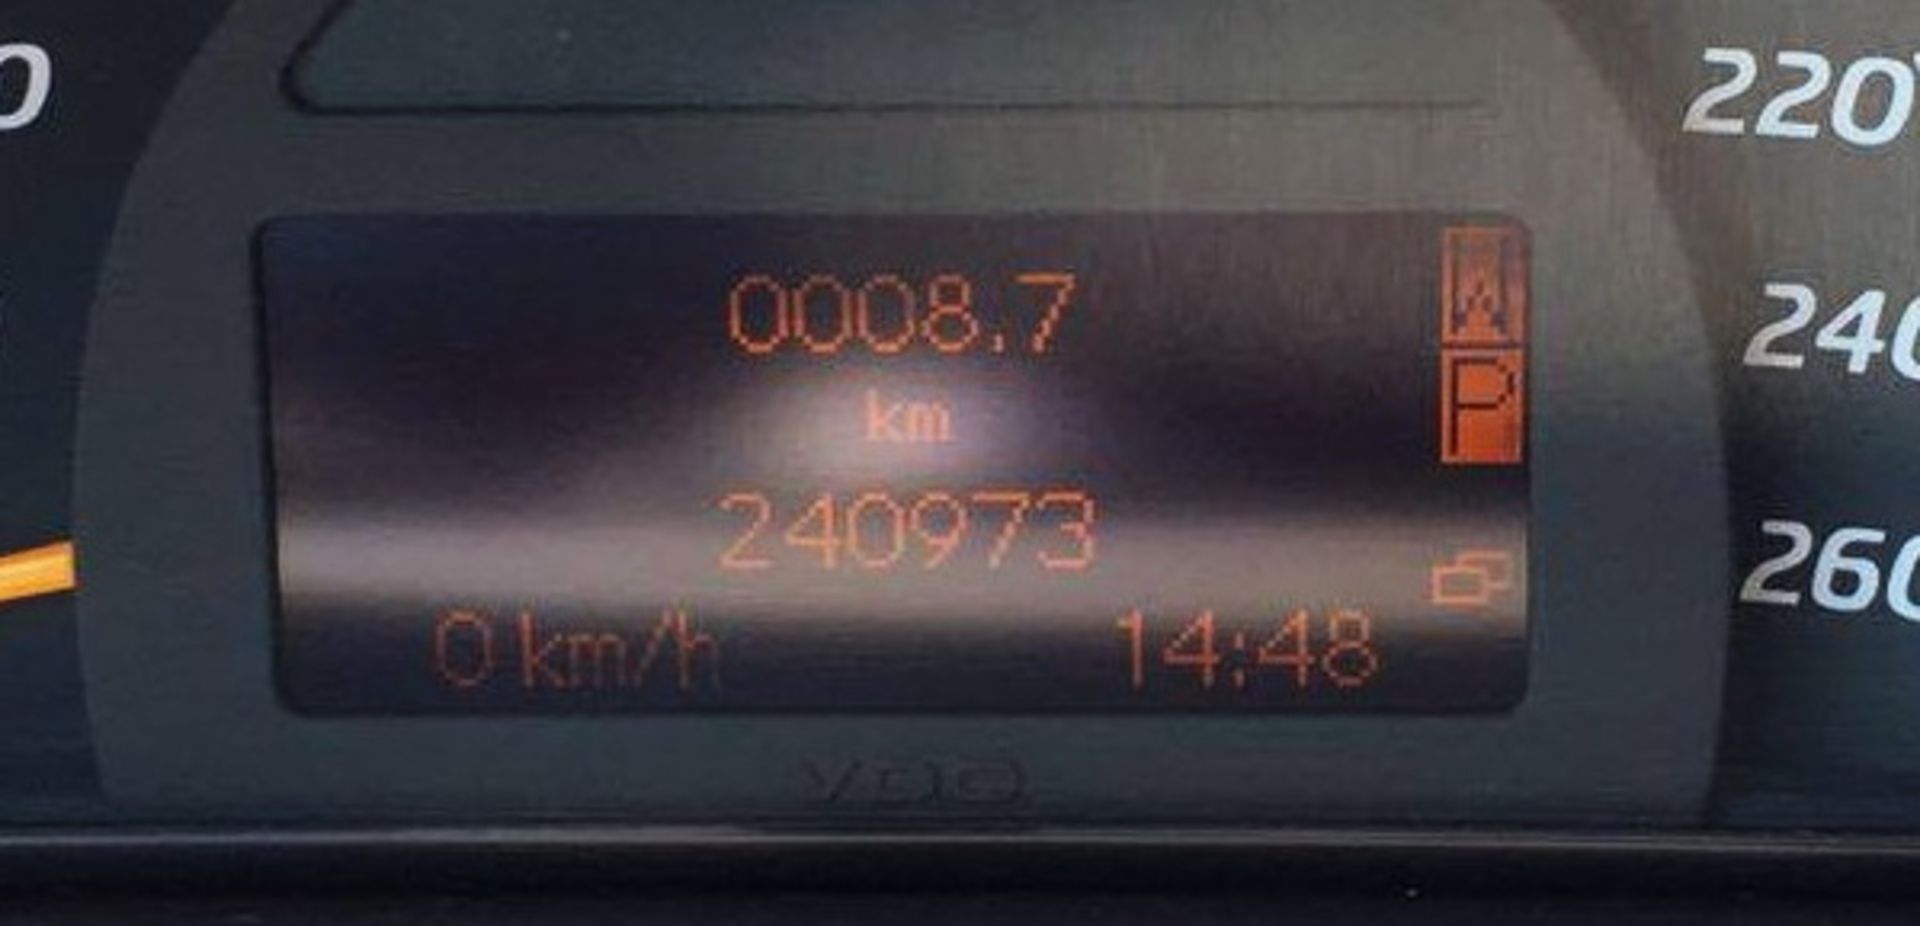 LHD 2001 MERCEDES-BENZ C200 KOMPRESSOR WITH LPG CONVERSION - LEFT HAND DRIVE IN SOFIA BULGARIA - Image 4 of 10